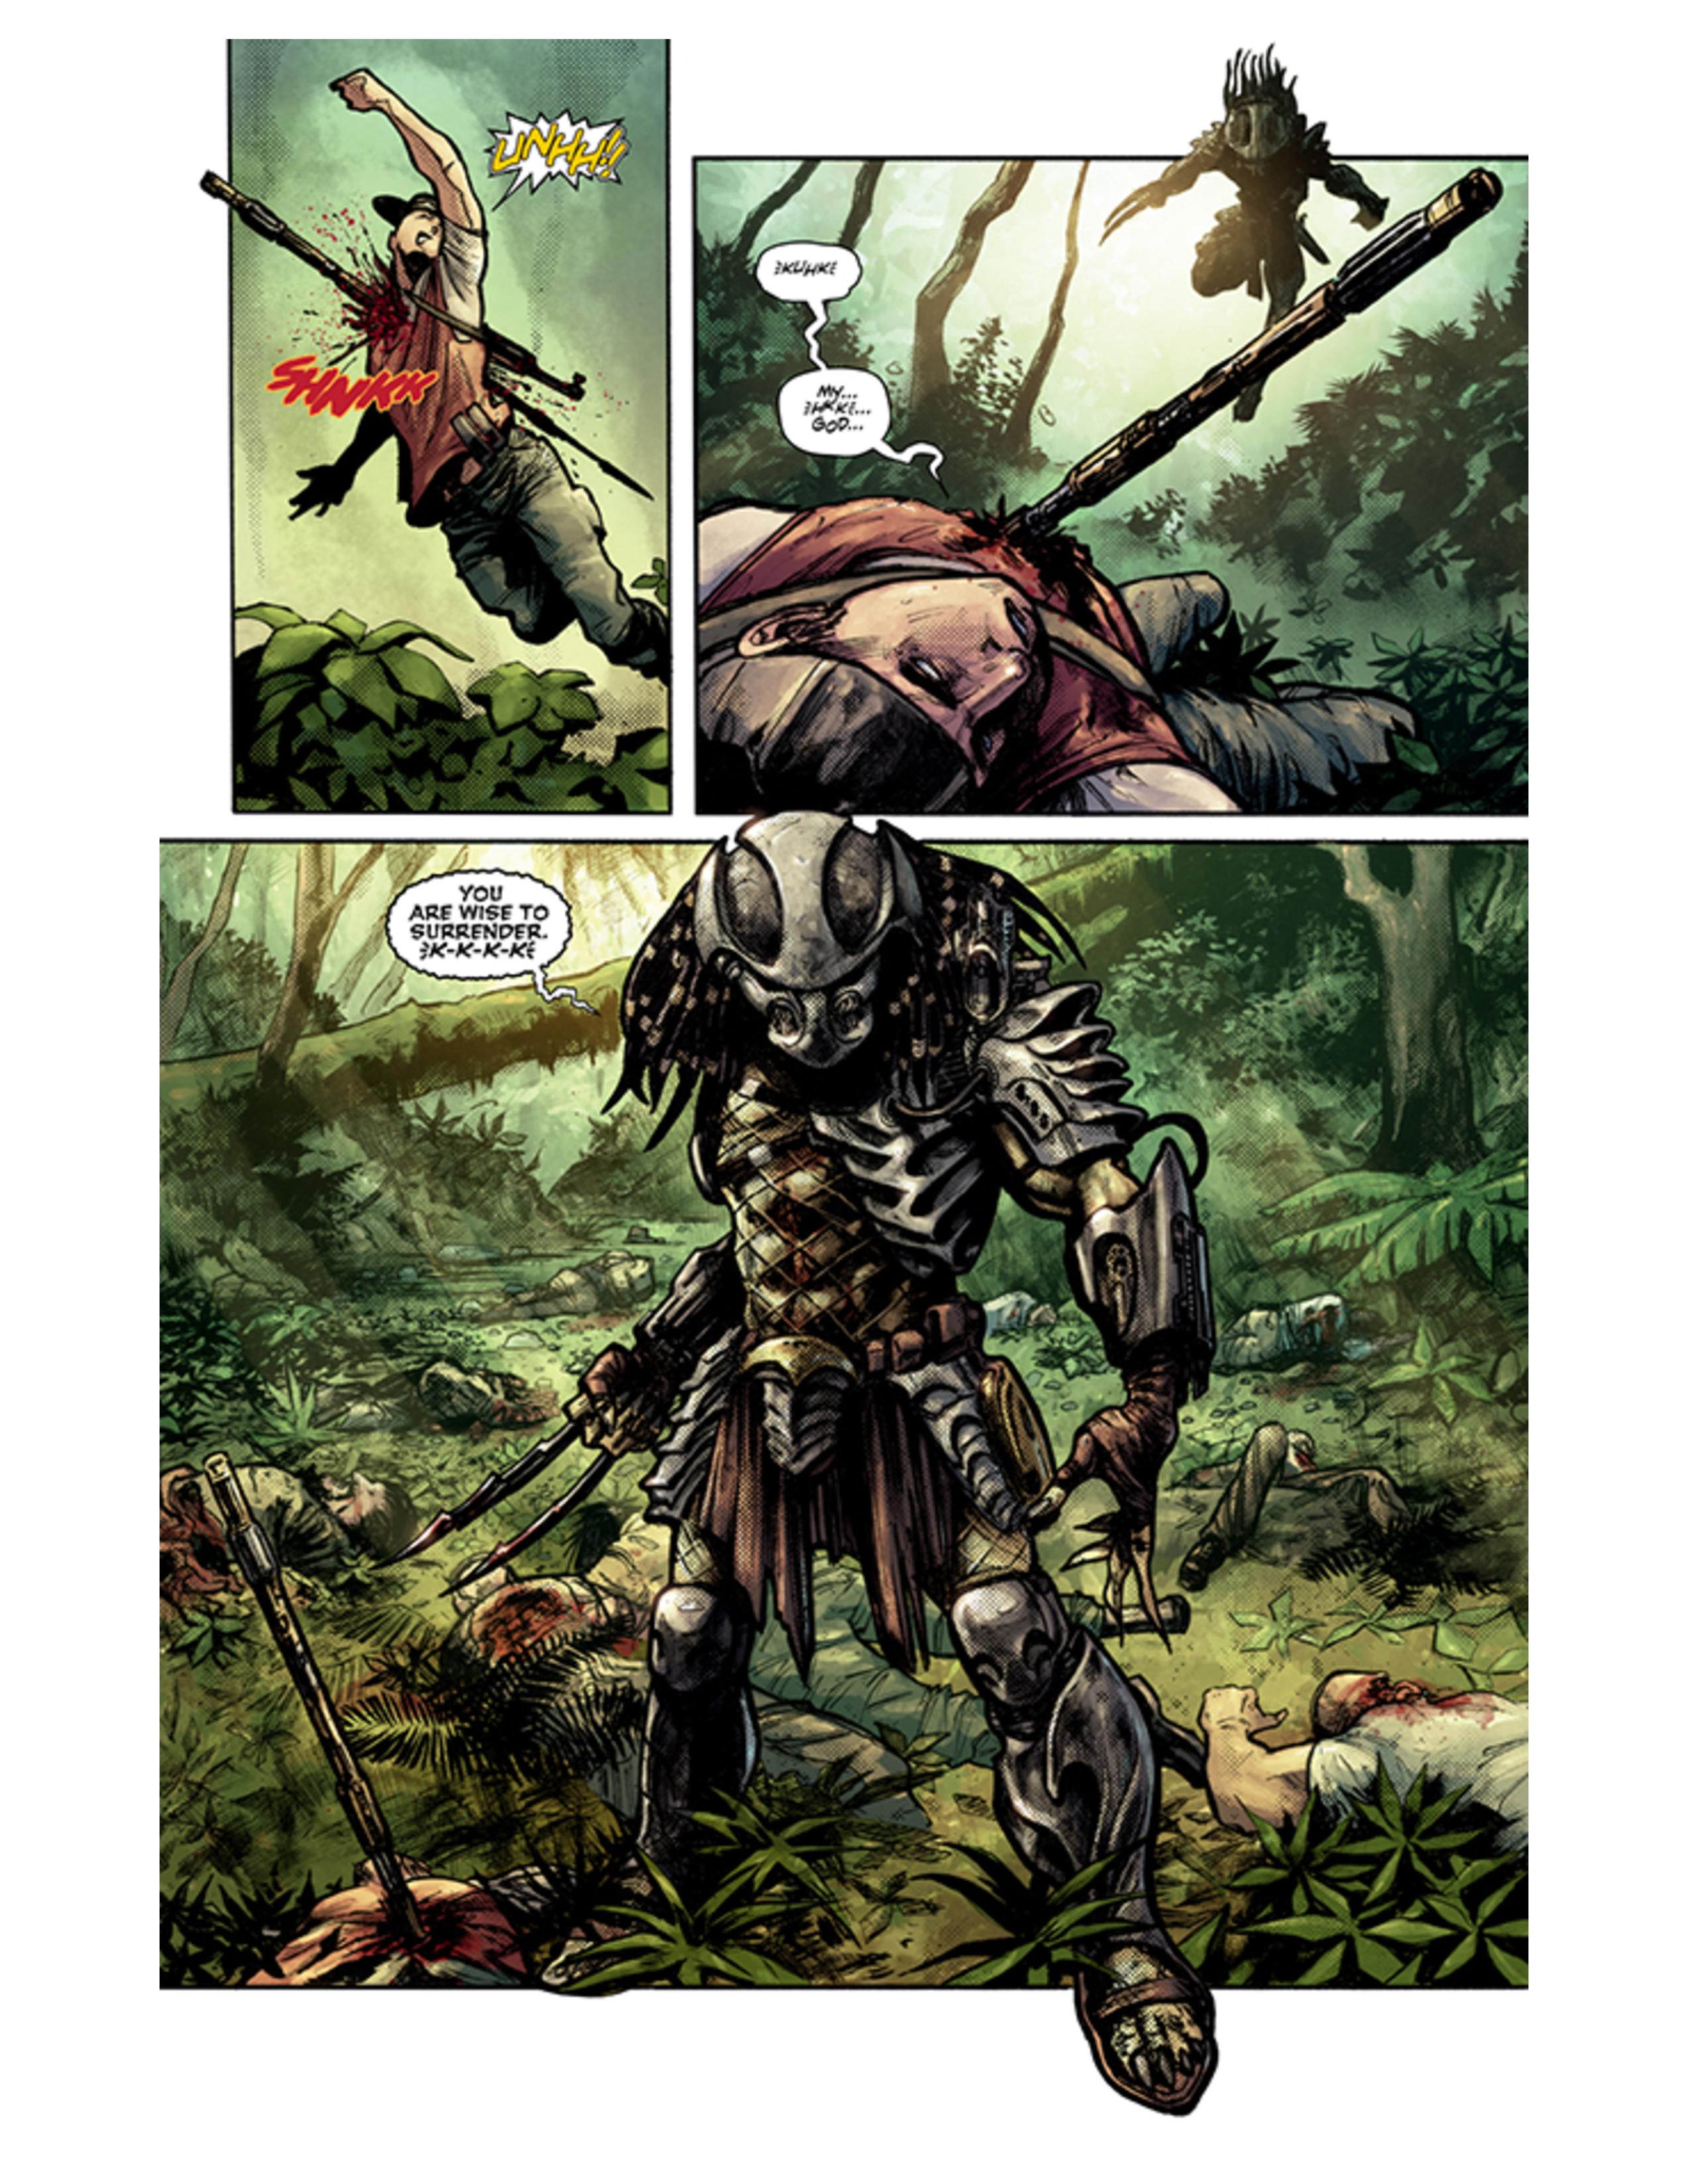 Predator Hunters III #1 Cover B Brase Glow In The Dark Ink (Of 4)